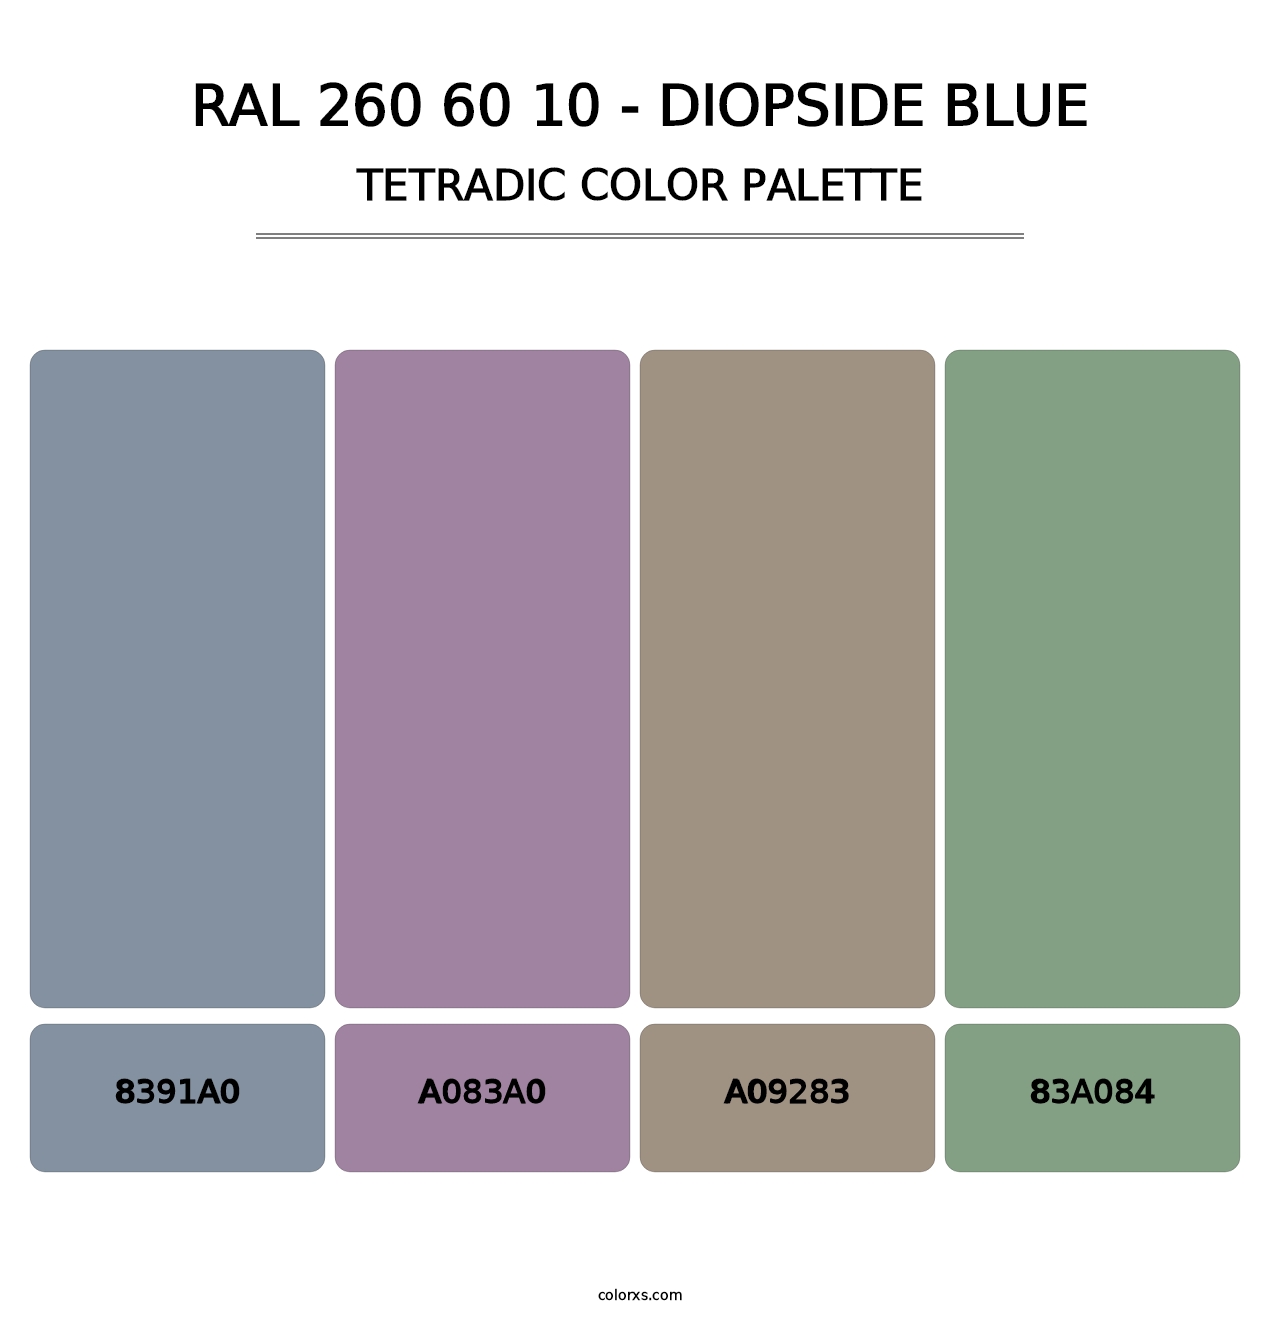 RAL 260 60 10 - Diopside Blue - Tetradic Color Palette